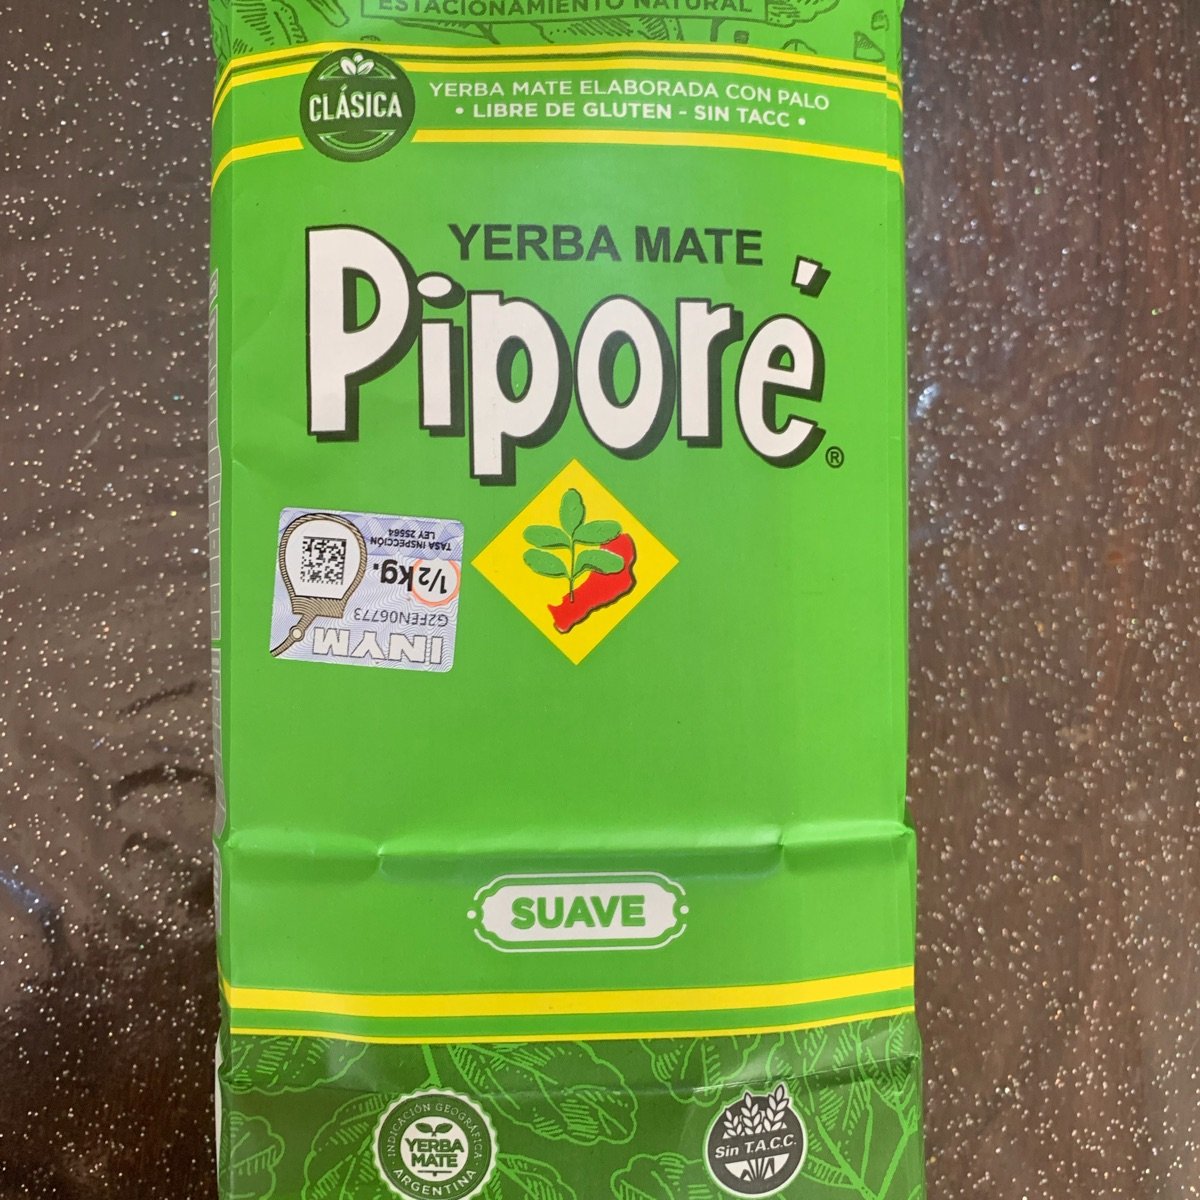 Piporé yerba mate suave Reviews | abillion